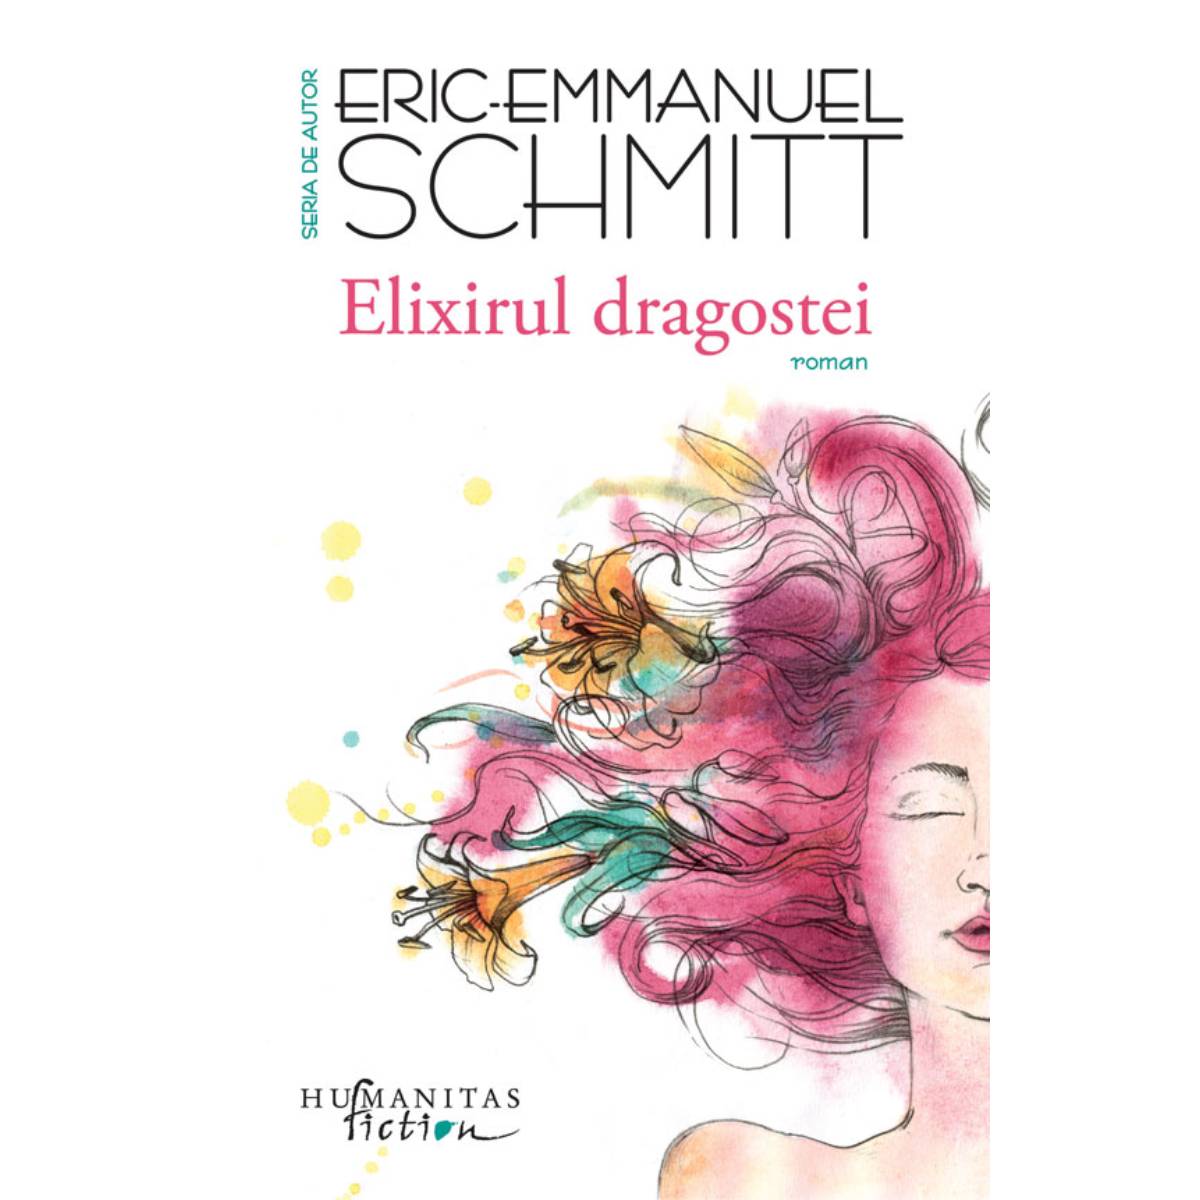 Elixirul dragostei, Eric-Emmanuel Schmitt Humanitas